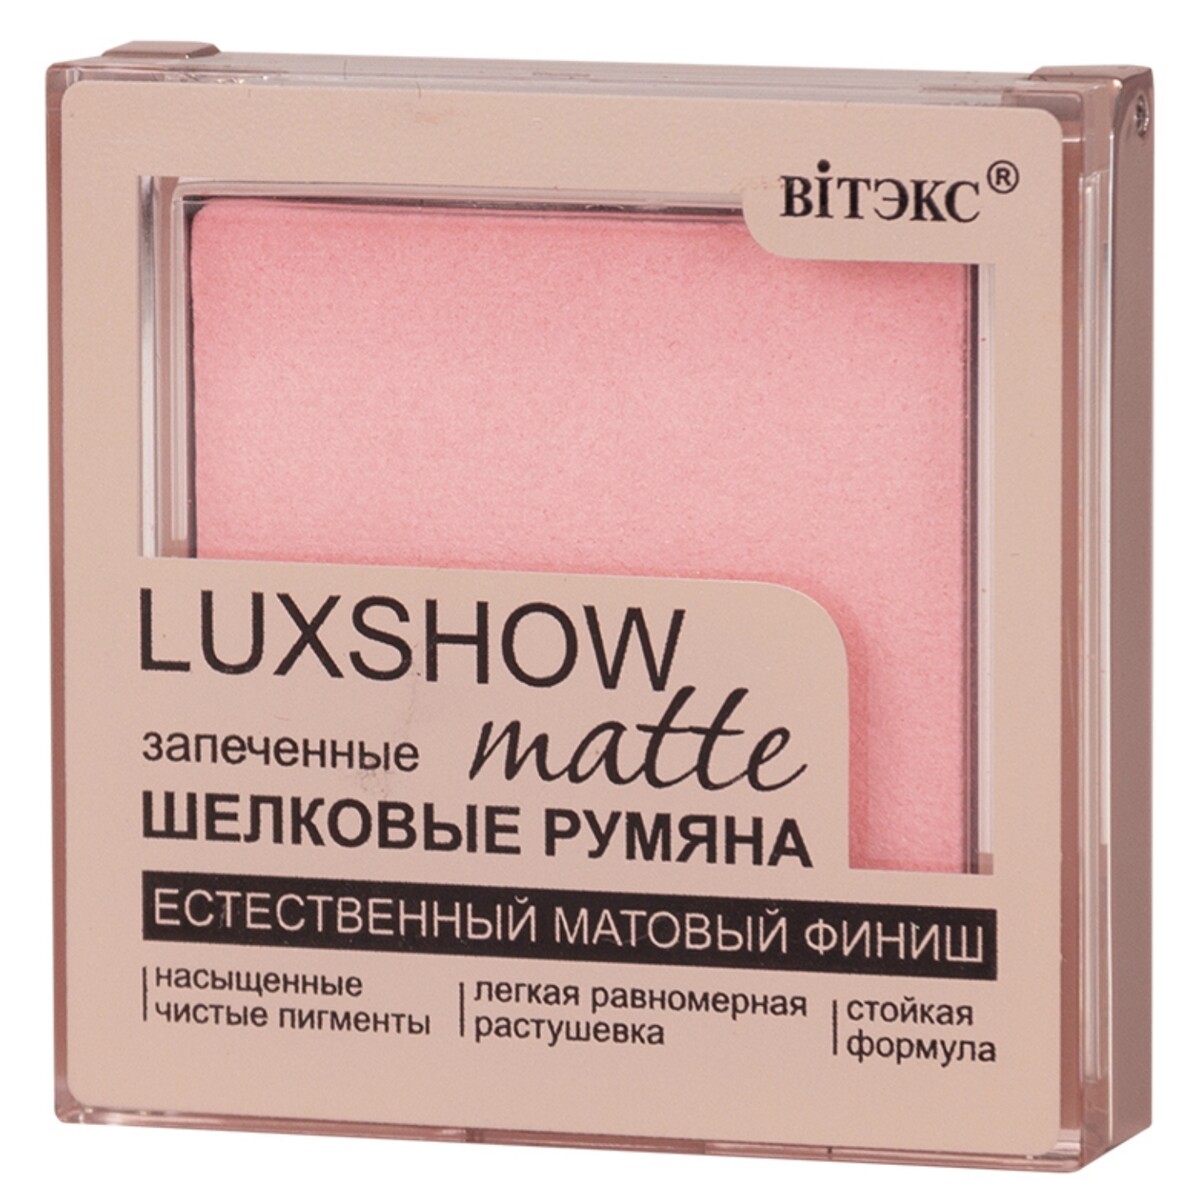 Vitex румяна матовые запеченные luxshow, тон 01, светло-розовый 4,5 г Витекс